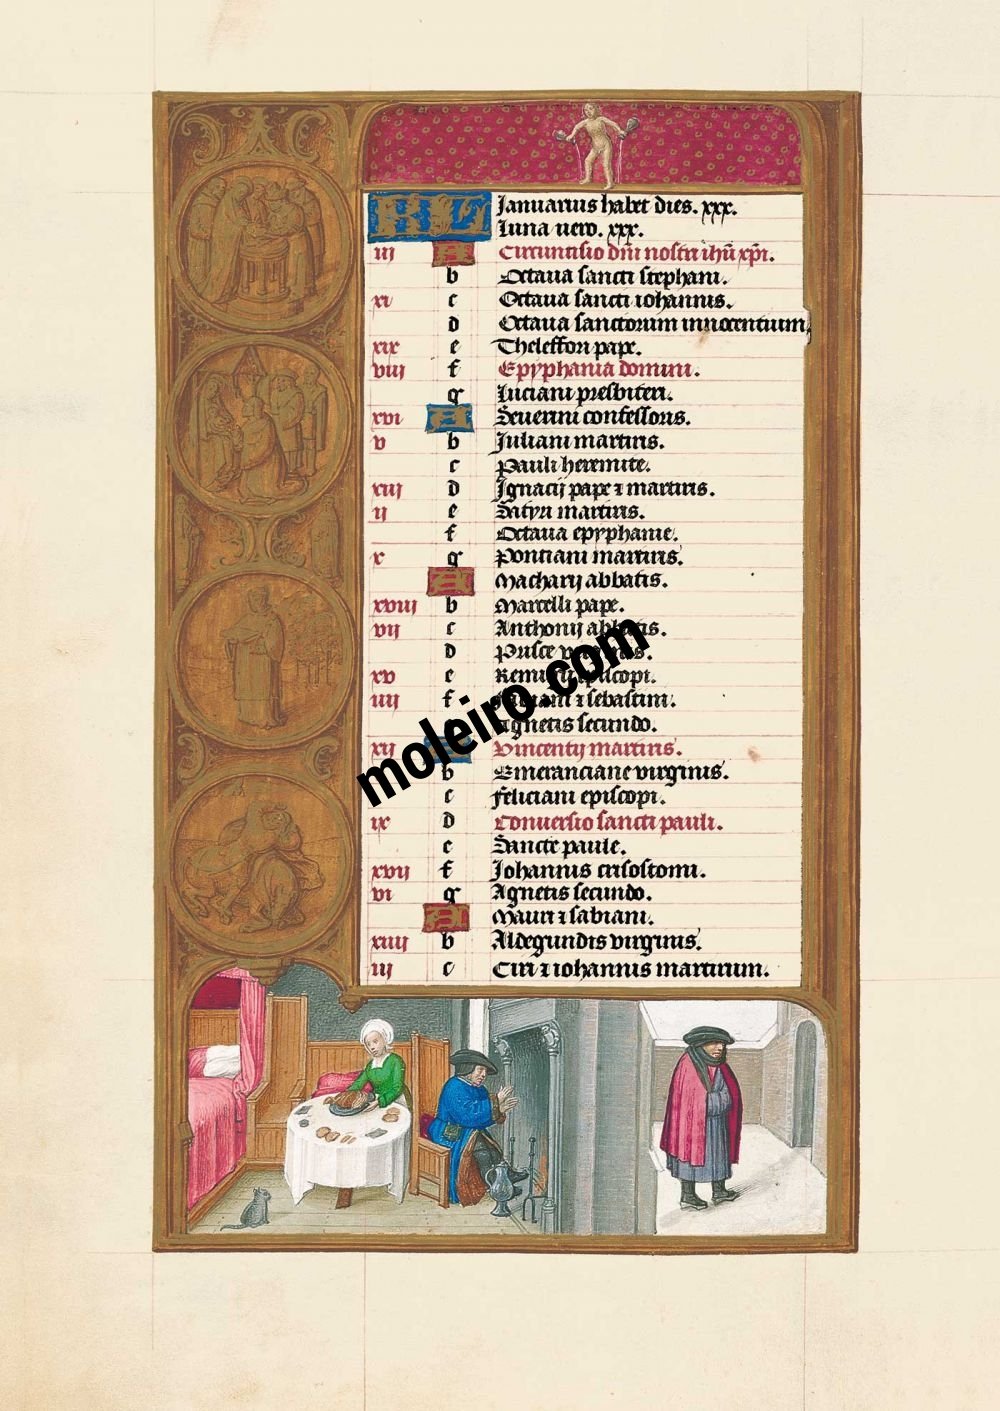 Libro de Horas de Juana I de Castilla f. 1v, Calendario, Enero